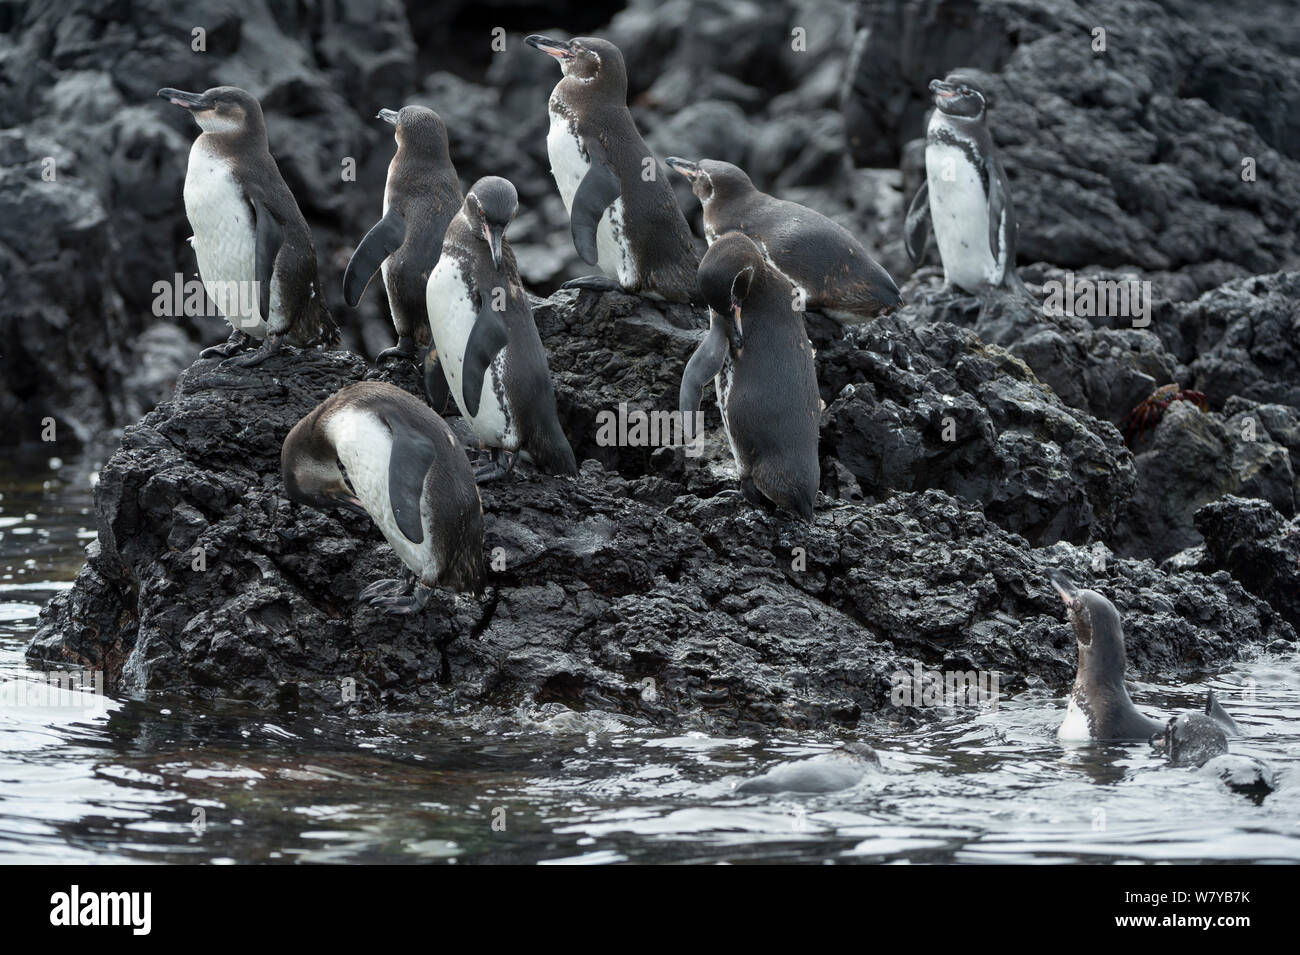 Galapagos penguins (Spheniscus mendiculus) standing on rocky shore, Galapagos, Ecuador. Endangered species. Stock Photo